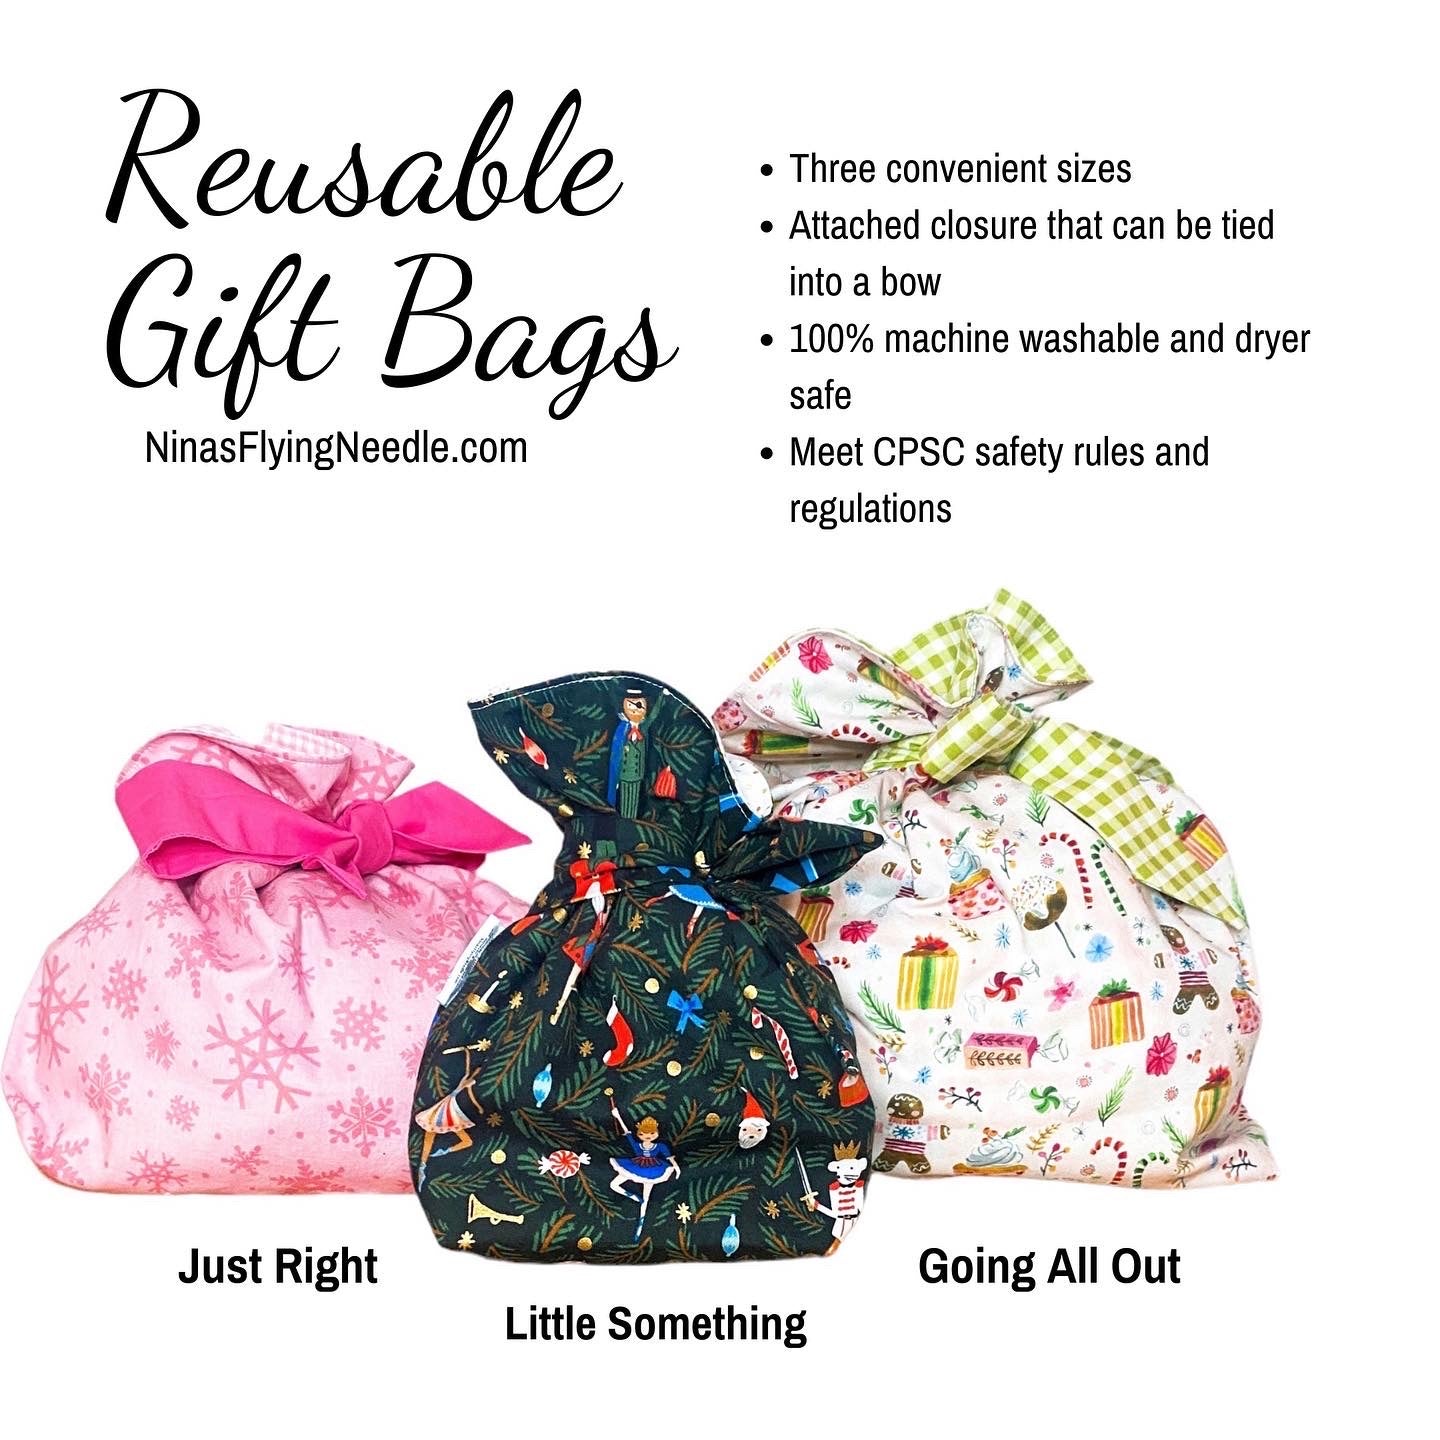 All Reusable Gift Bags